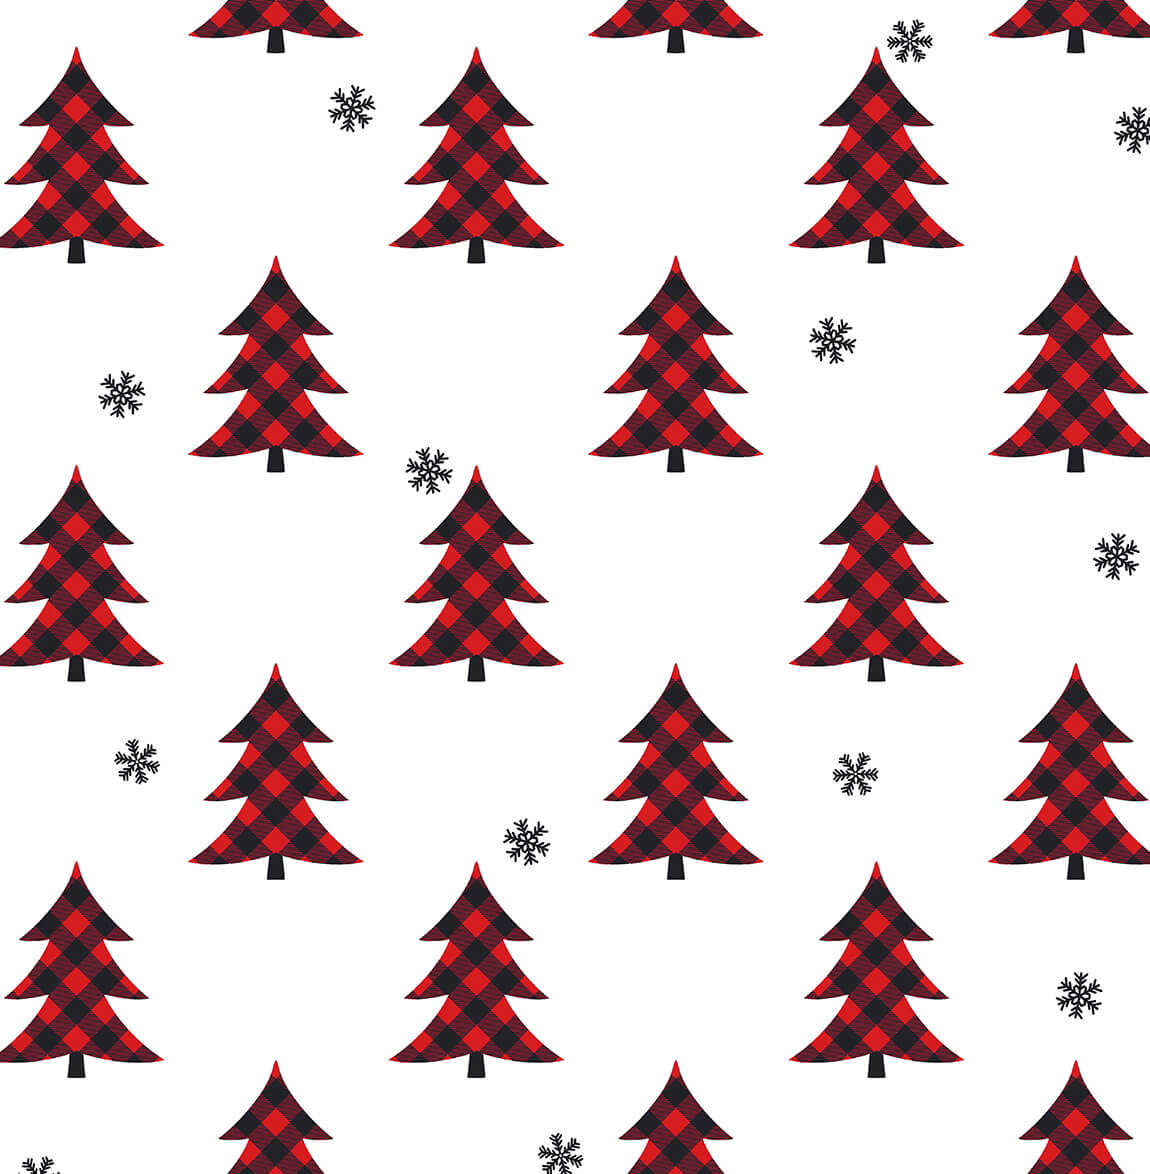 NextWall Plaid Pines Holiday Peel & Stick Wallpaper - Red & Black